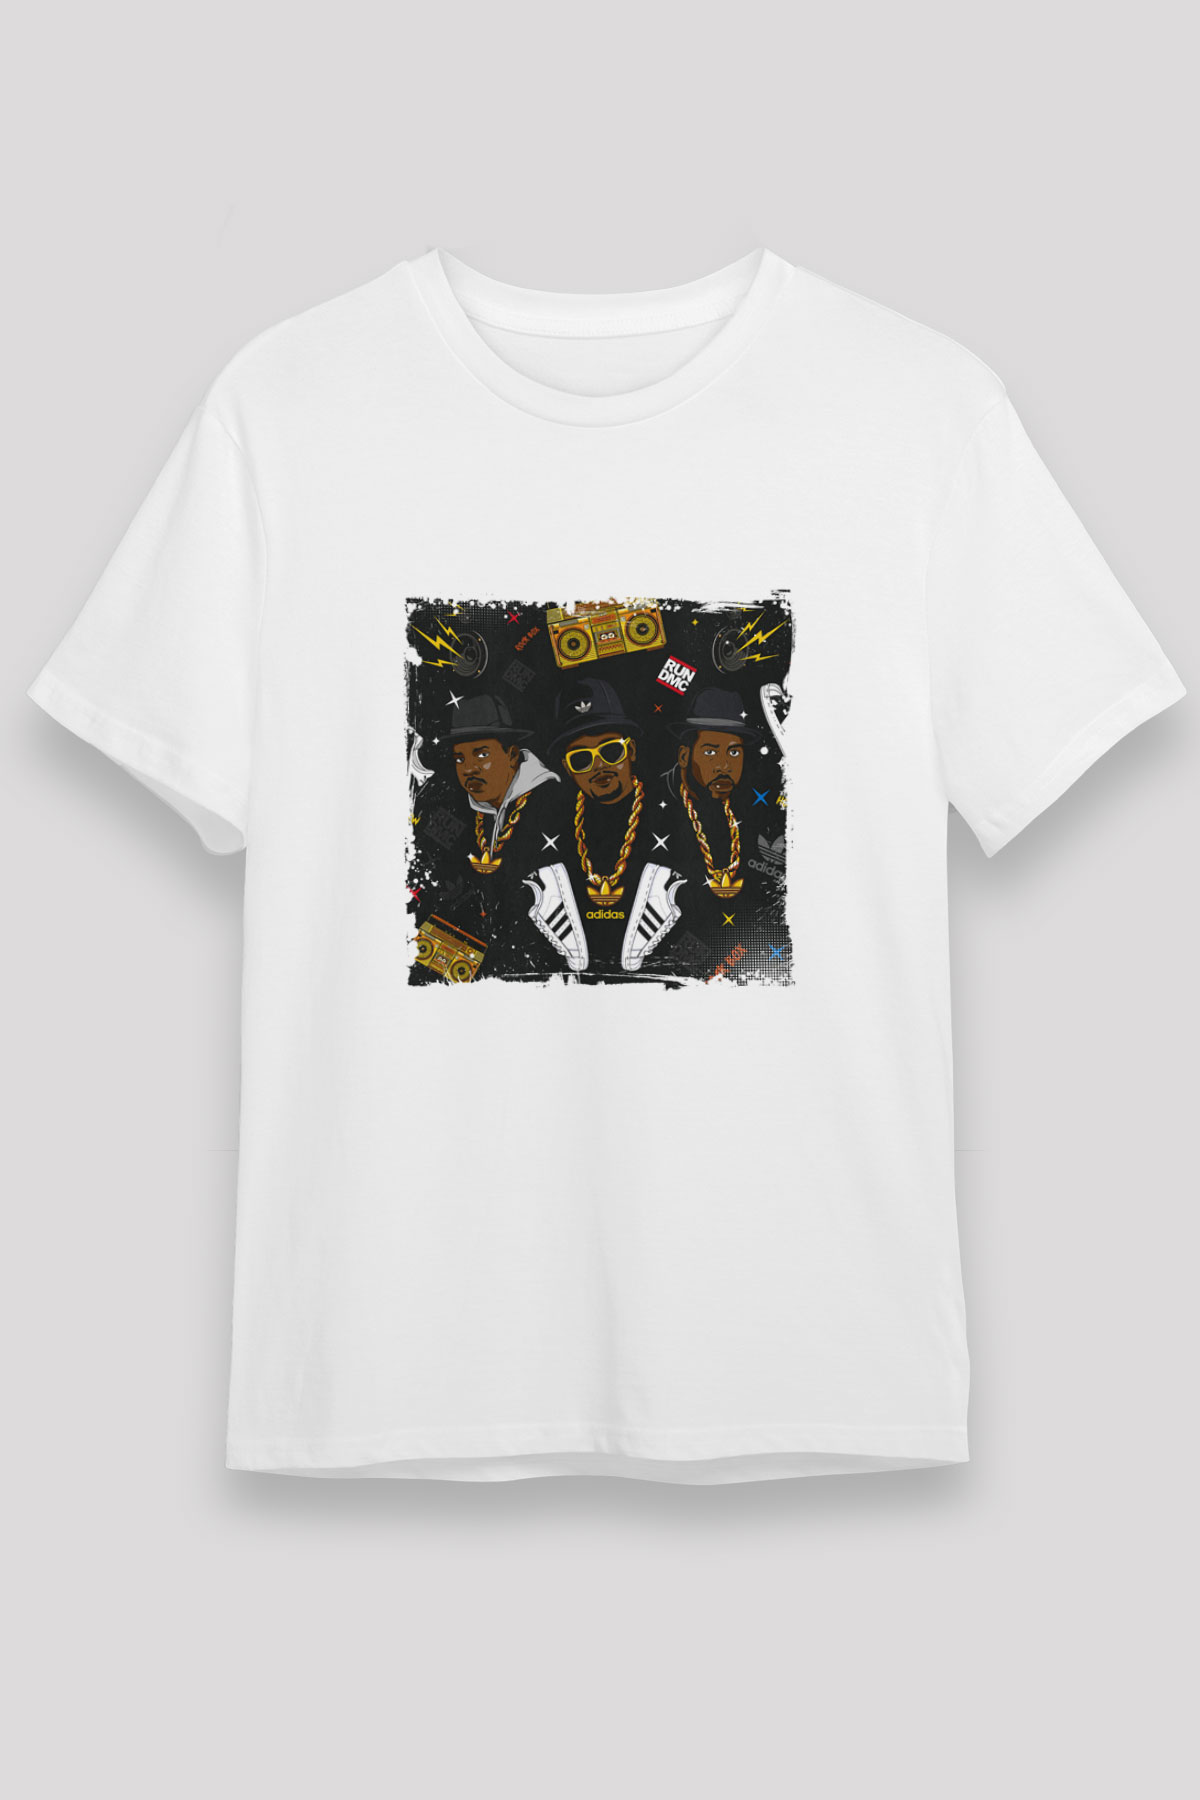 Run DMC T shirt,Hip Hop,Rap Tshirt 06/